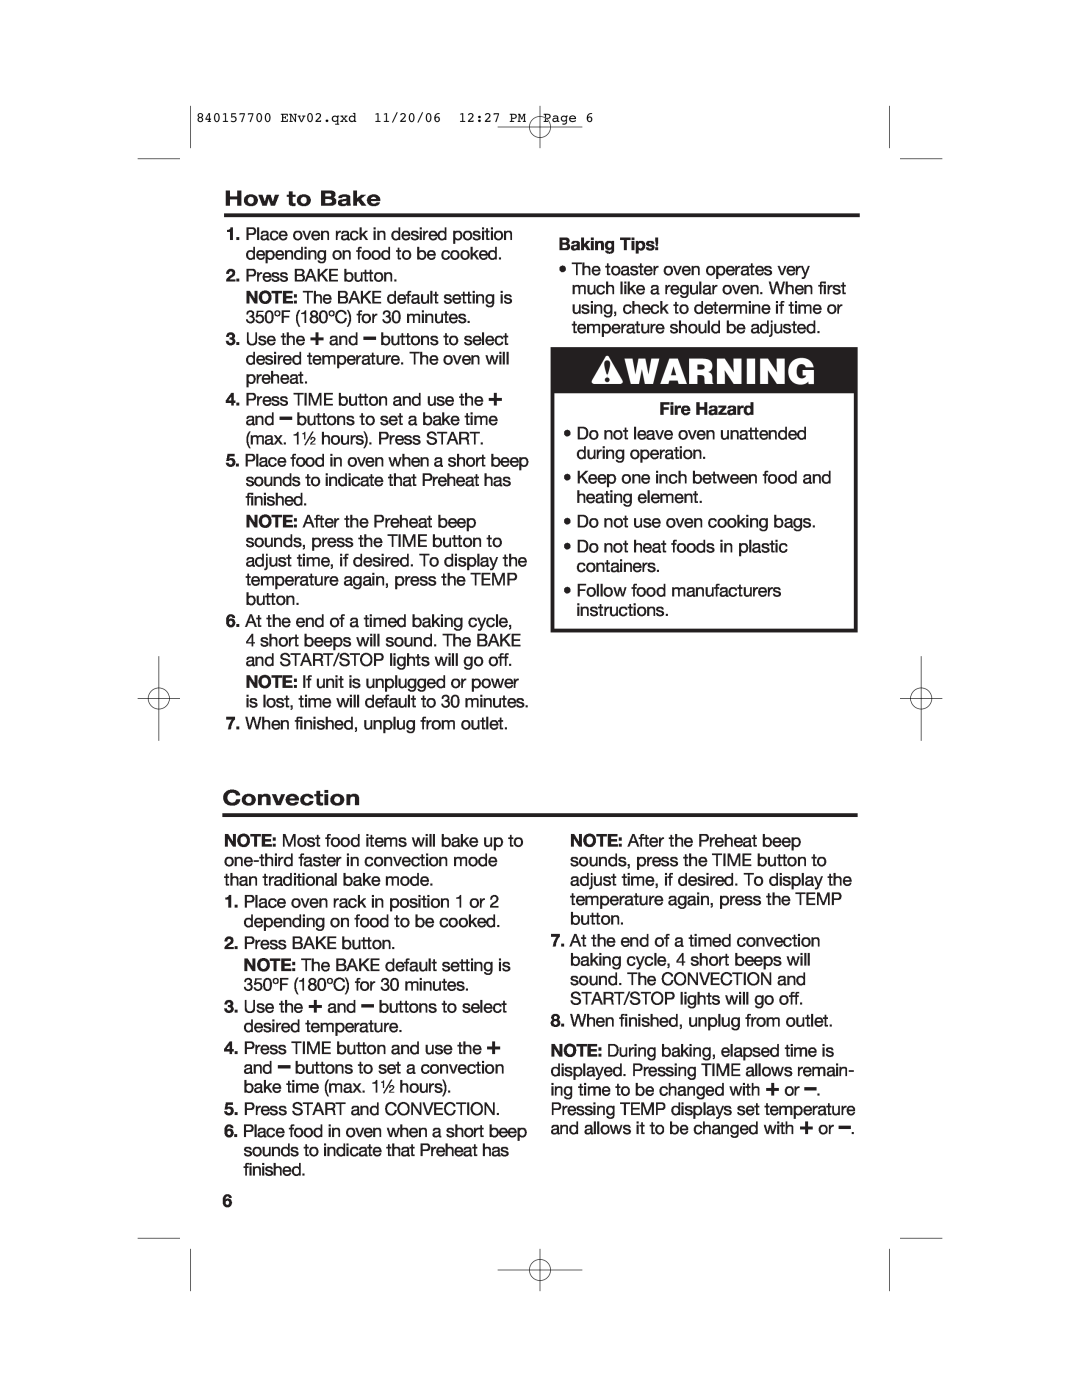 Hamilton Beach 31150C manual How to Bake, Convection, Baking Tips, wWARNING, Fire Hazard 